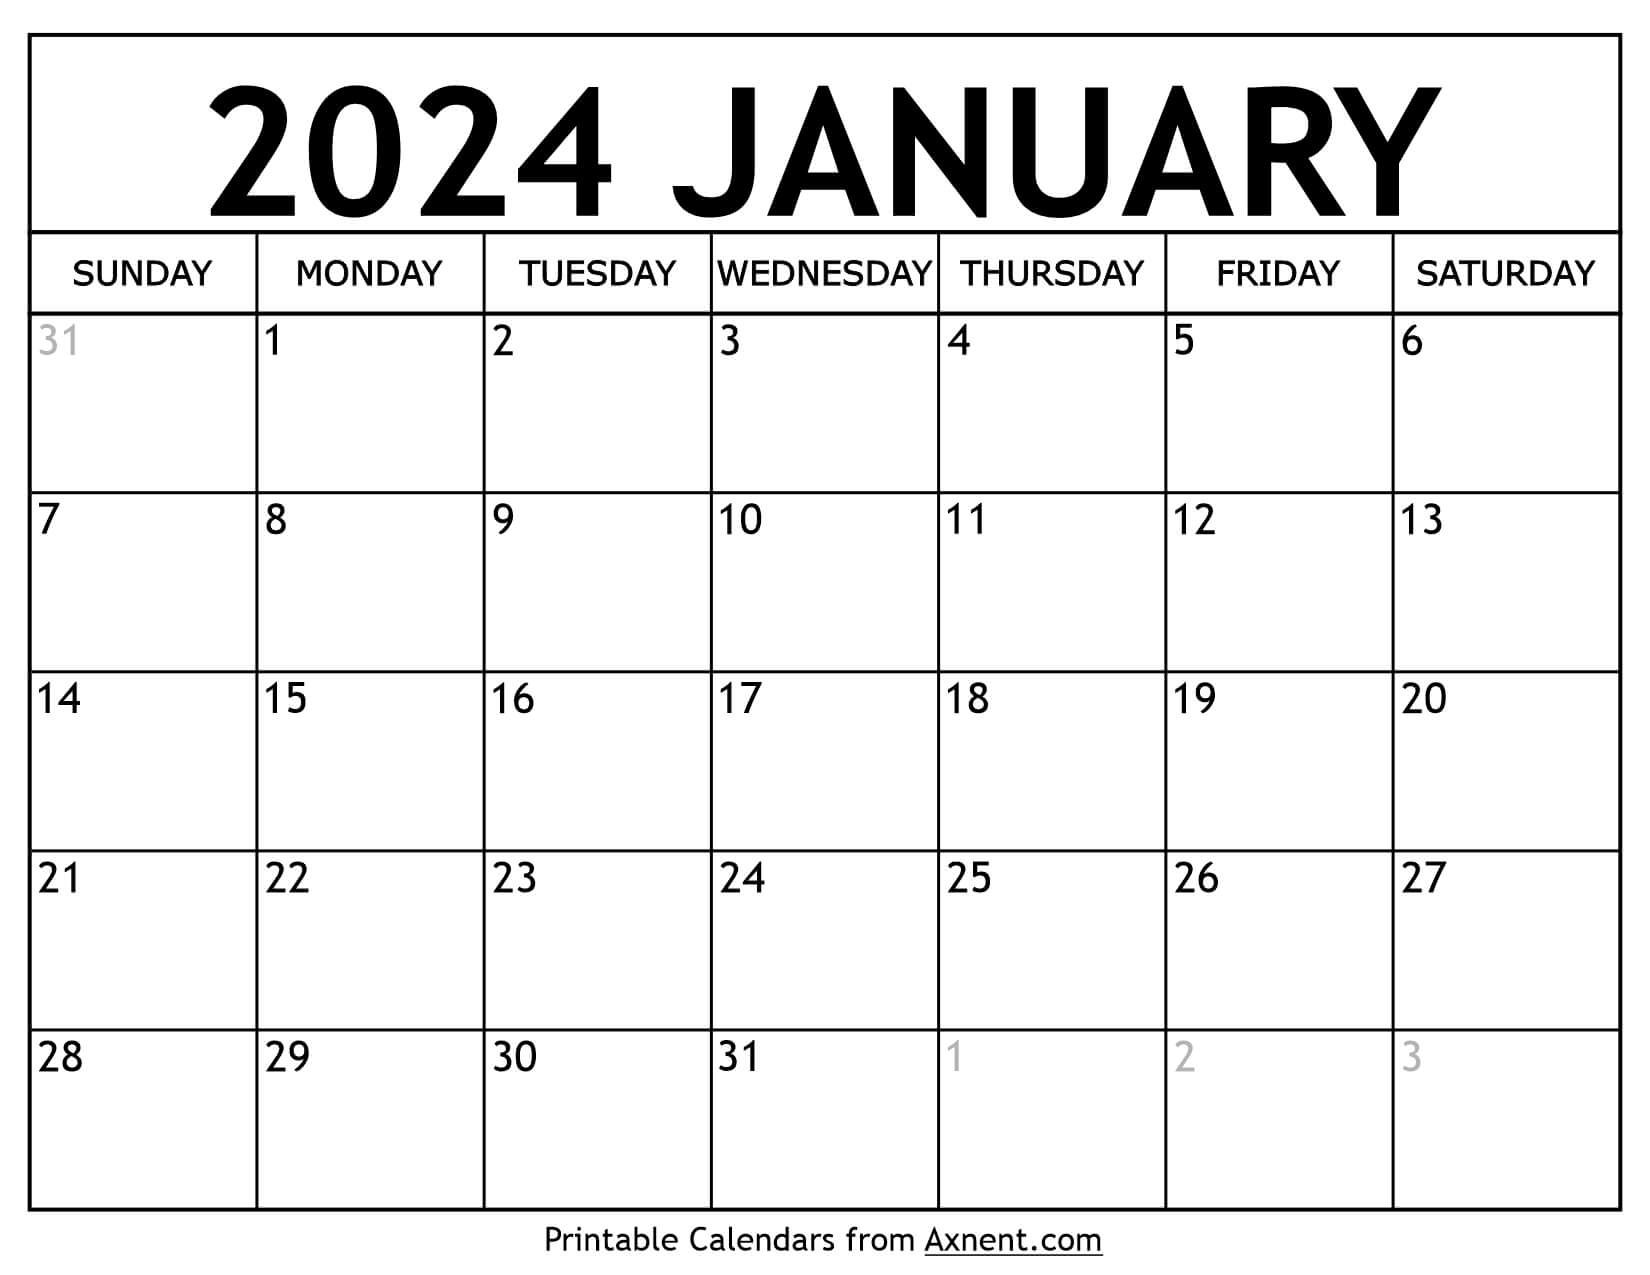 Printable January 2024 Calendar Template - Print Now for Free Printable Calendar For January 2024